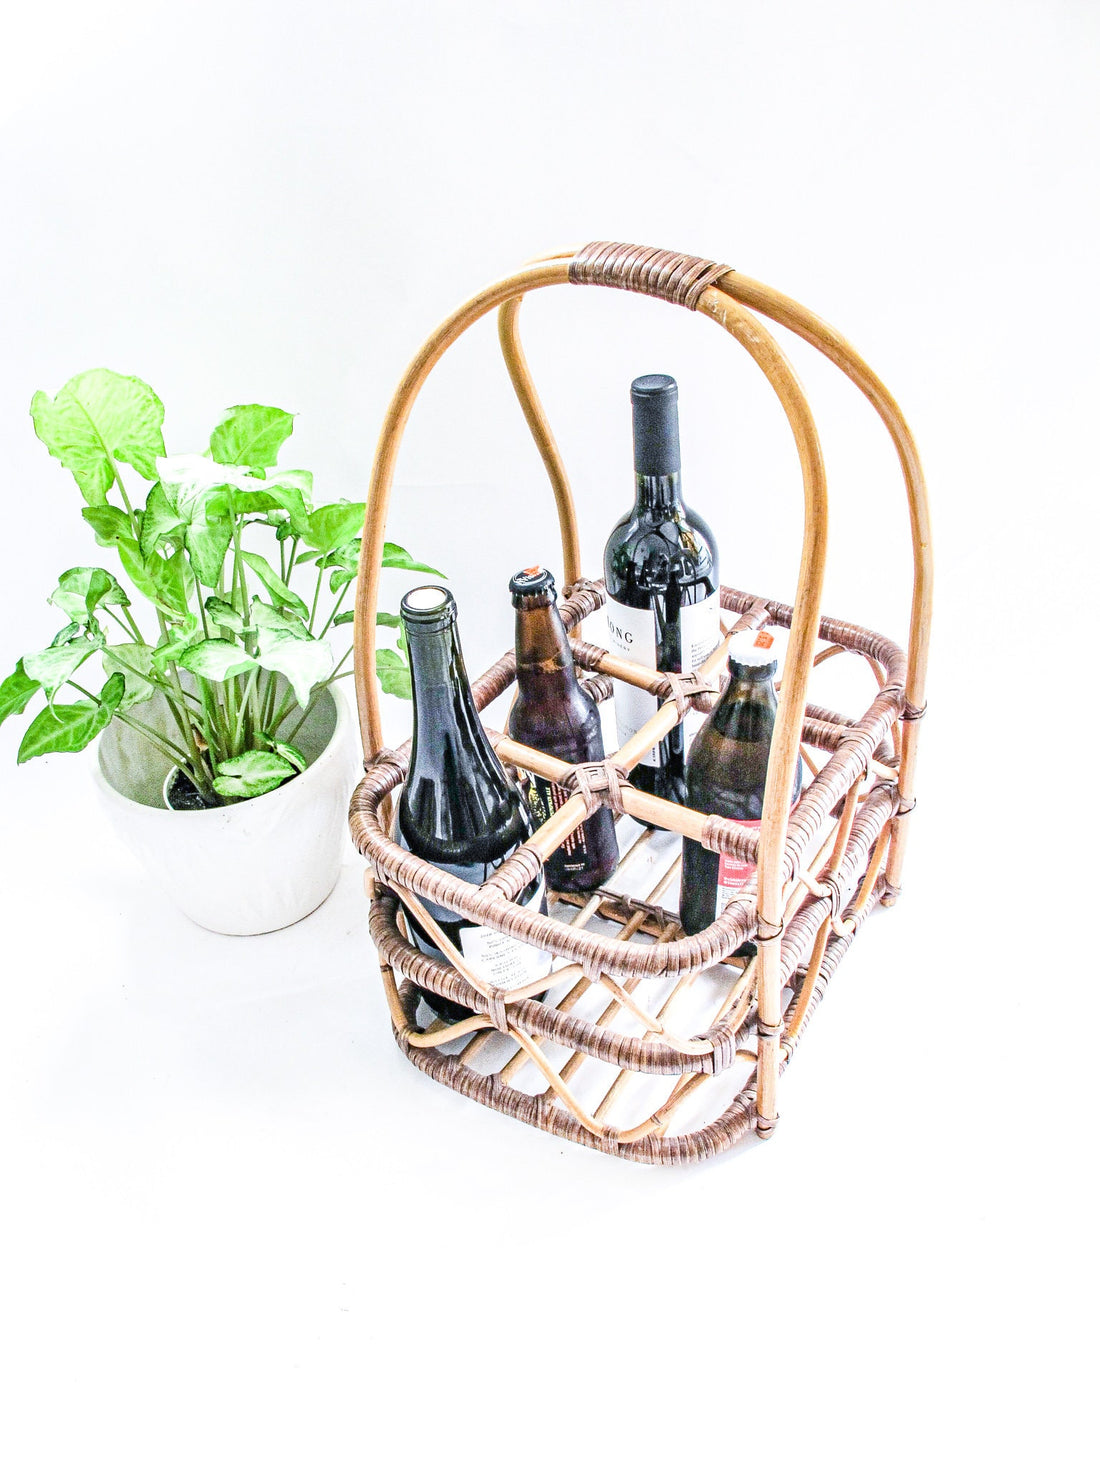 Bamboo Bottle Basket Carrier